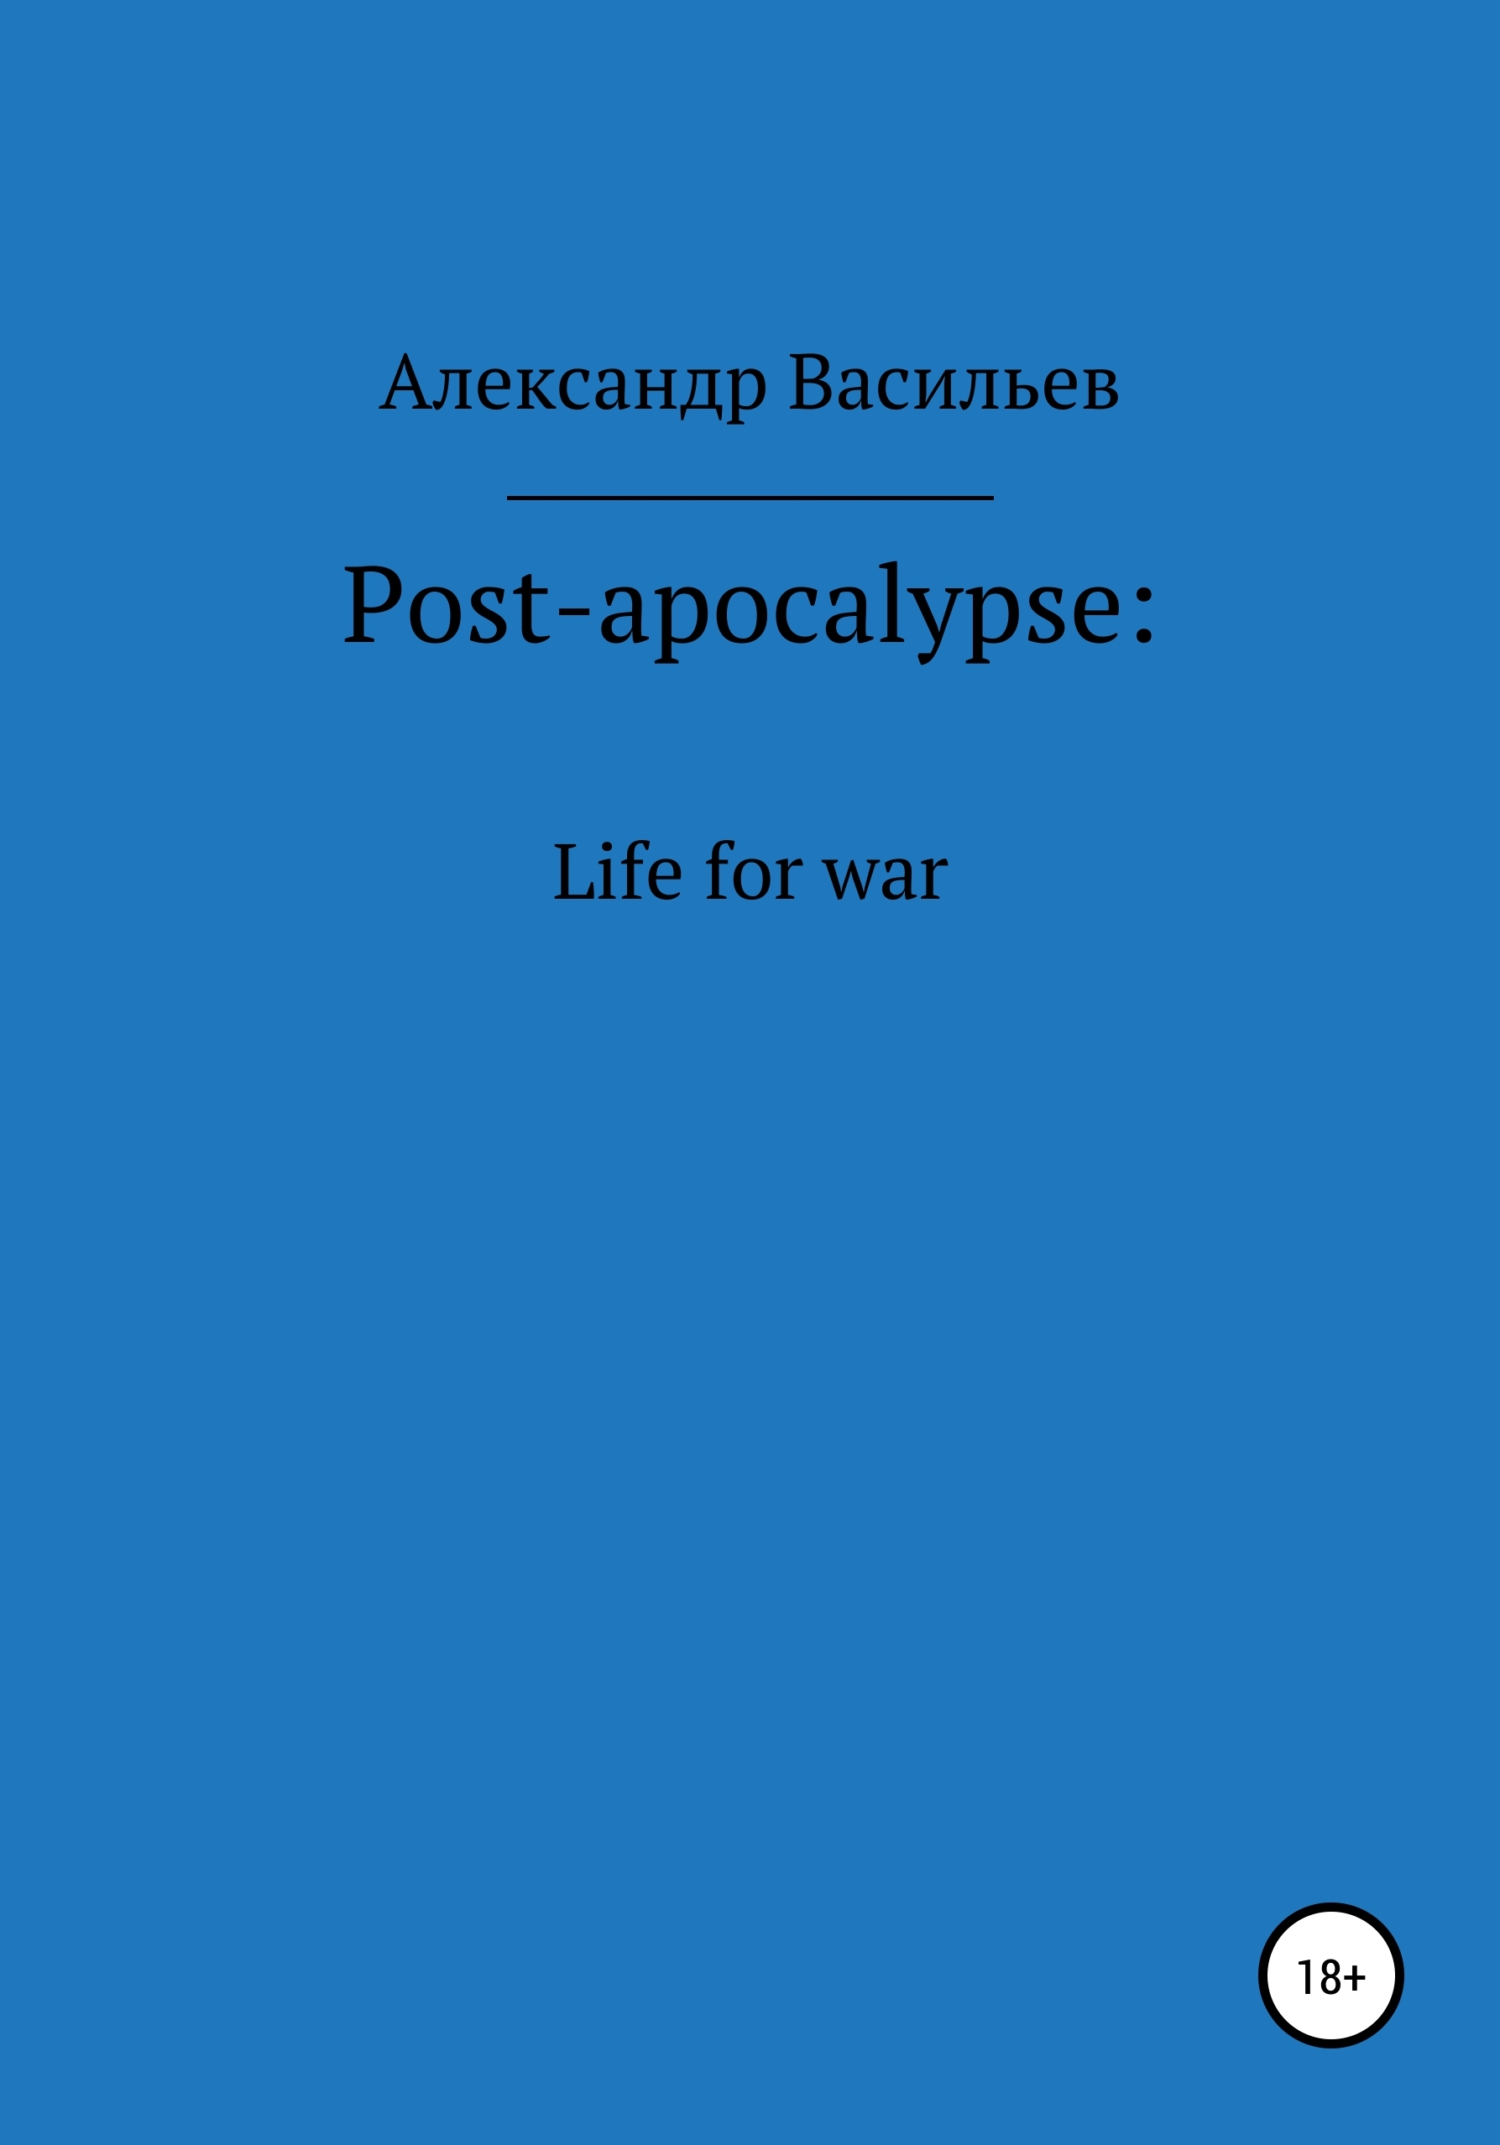 Post-apocalypse. Life for war